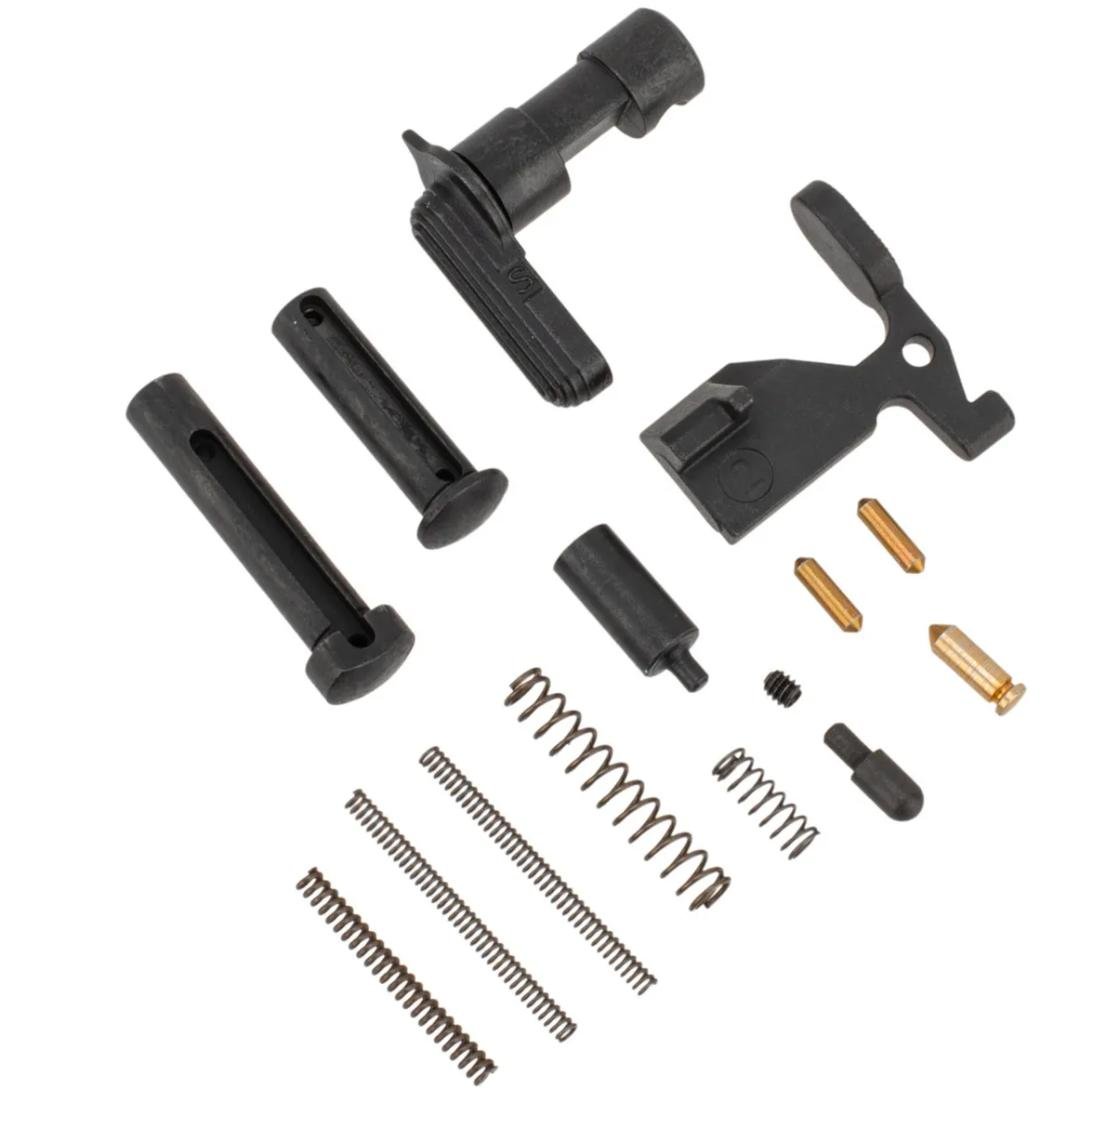 Aero Precision EPC Lower Parts Kit - No FCG/Grip - $19.99